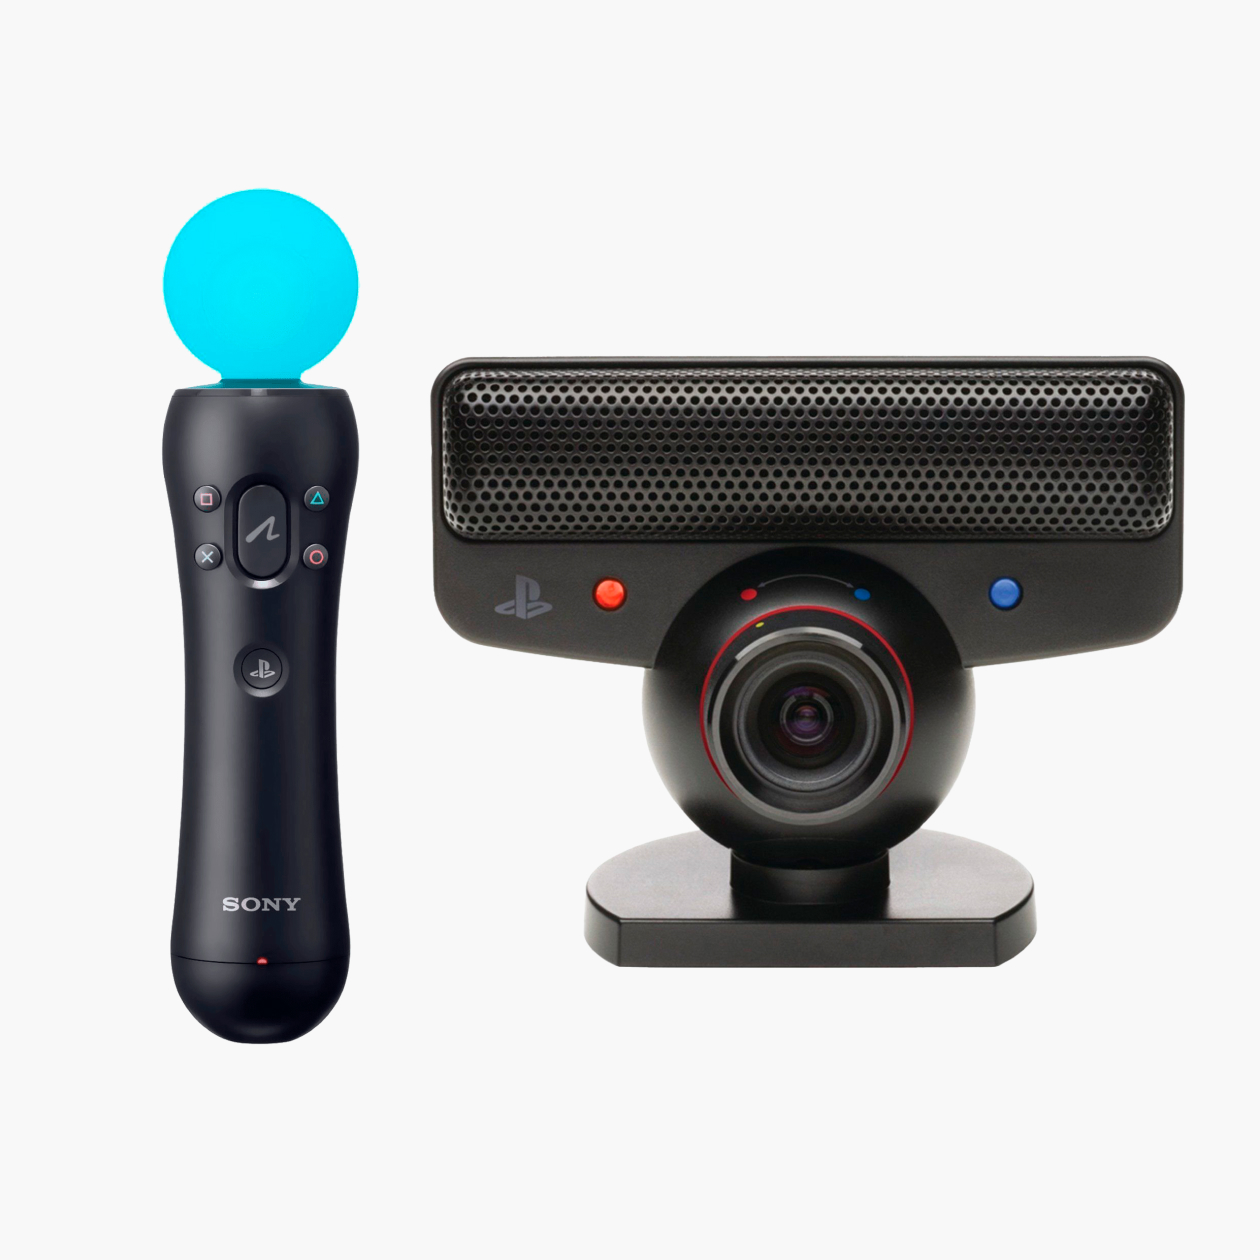 Контроллер PlayStation Move и камера PlayStation Eye